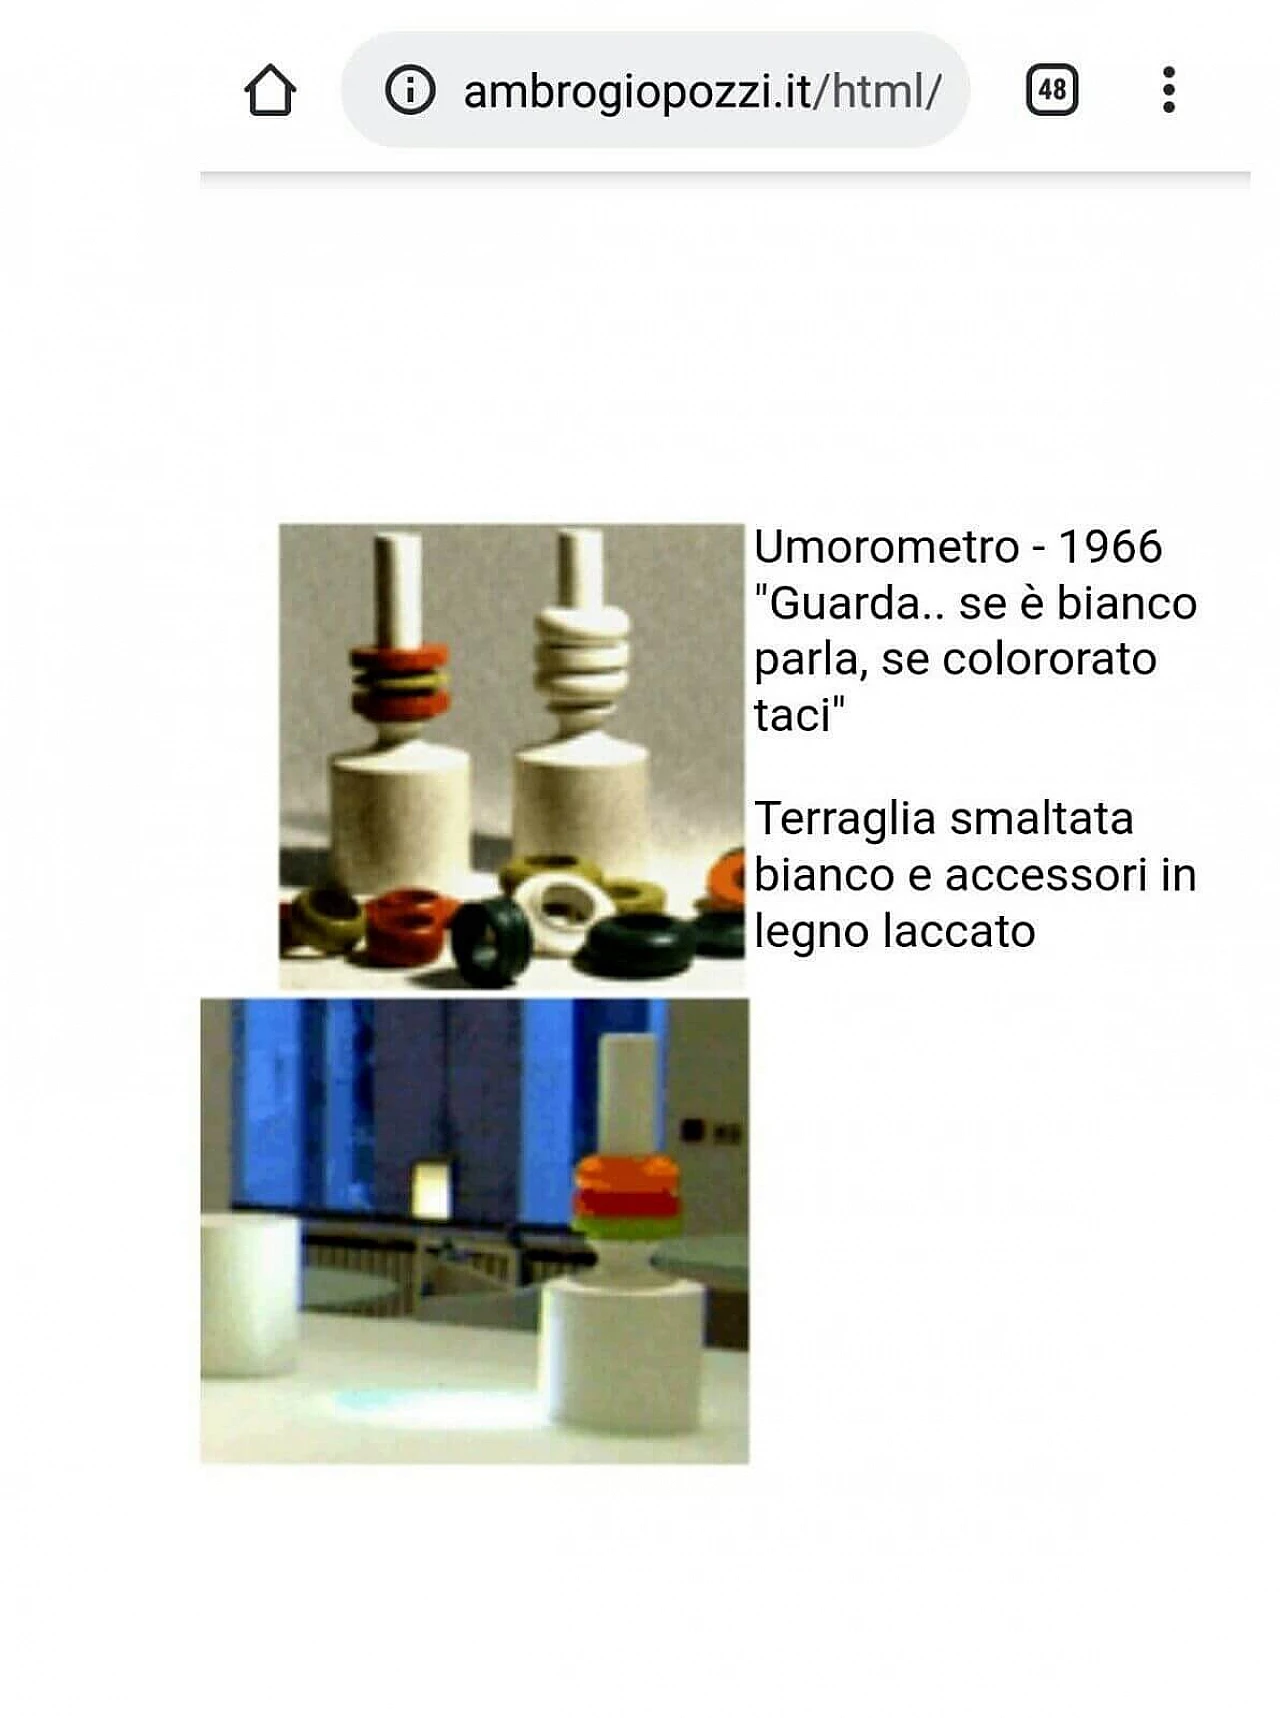 Ceramic vase Umorometro by Ambrogio Pozzi for Franco Pozzi, 1966 1170540